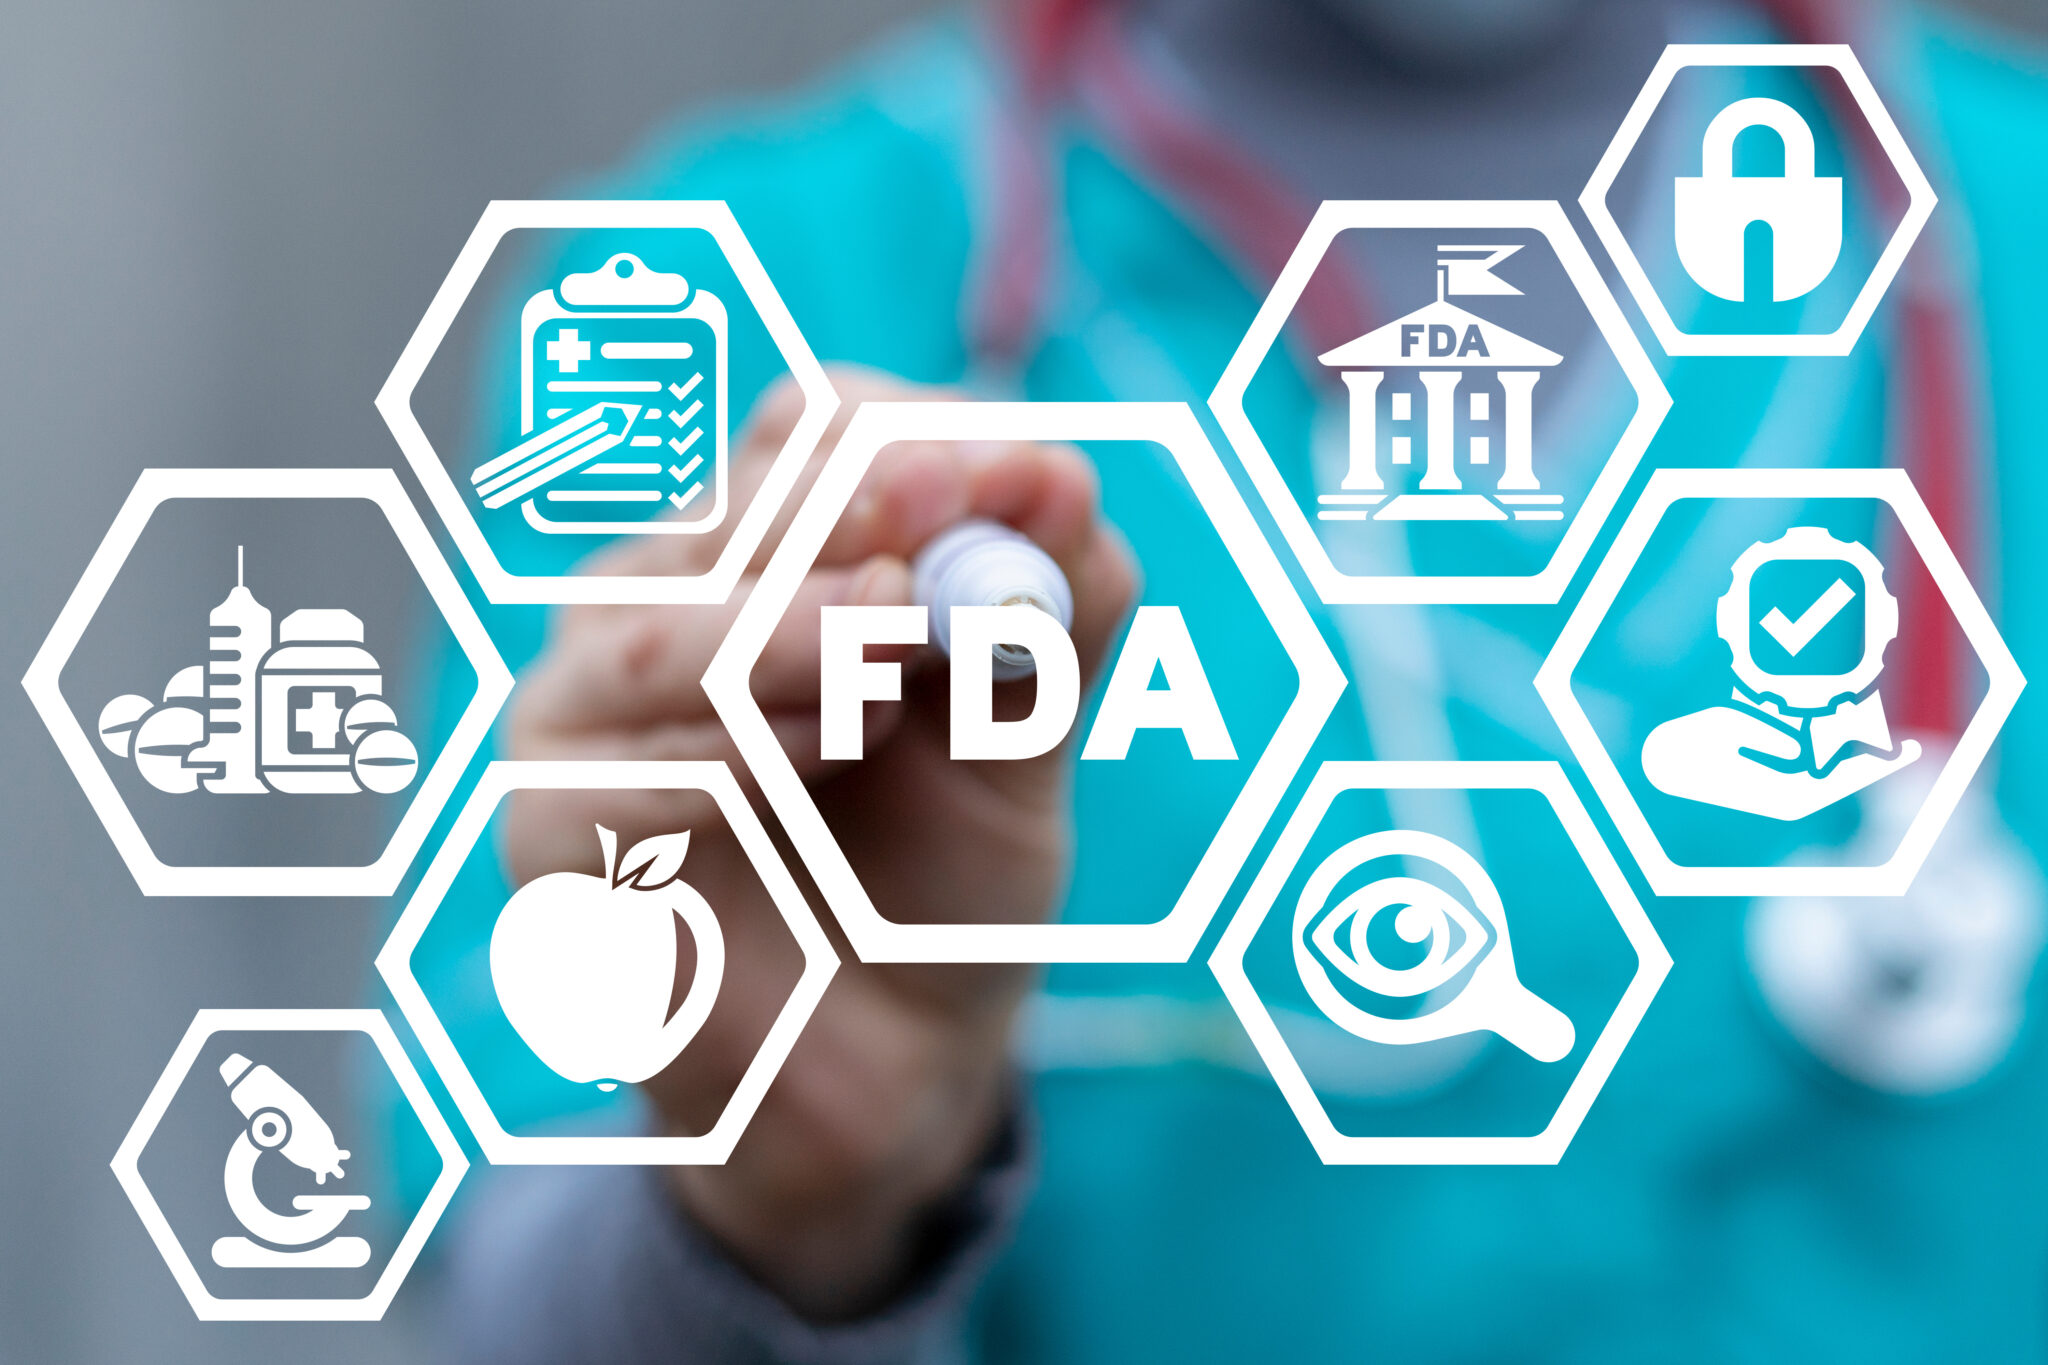 Illustrative image - FDA